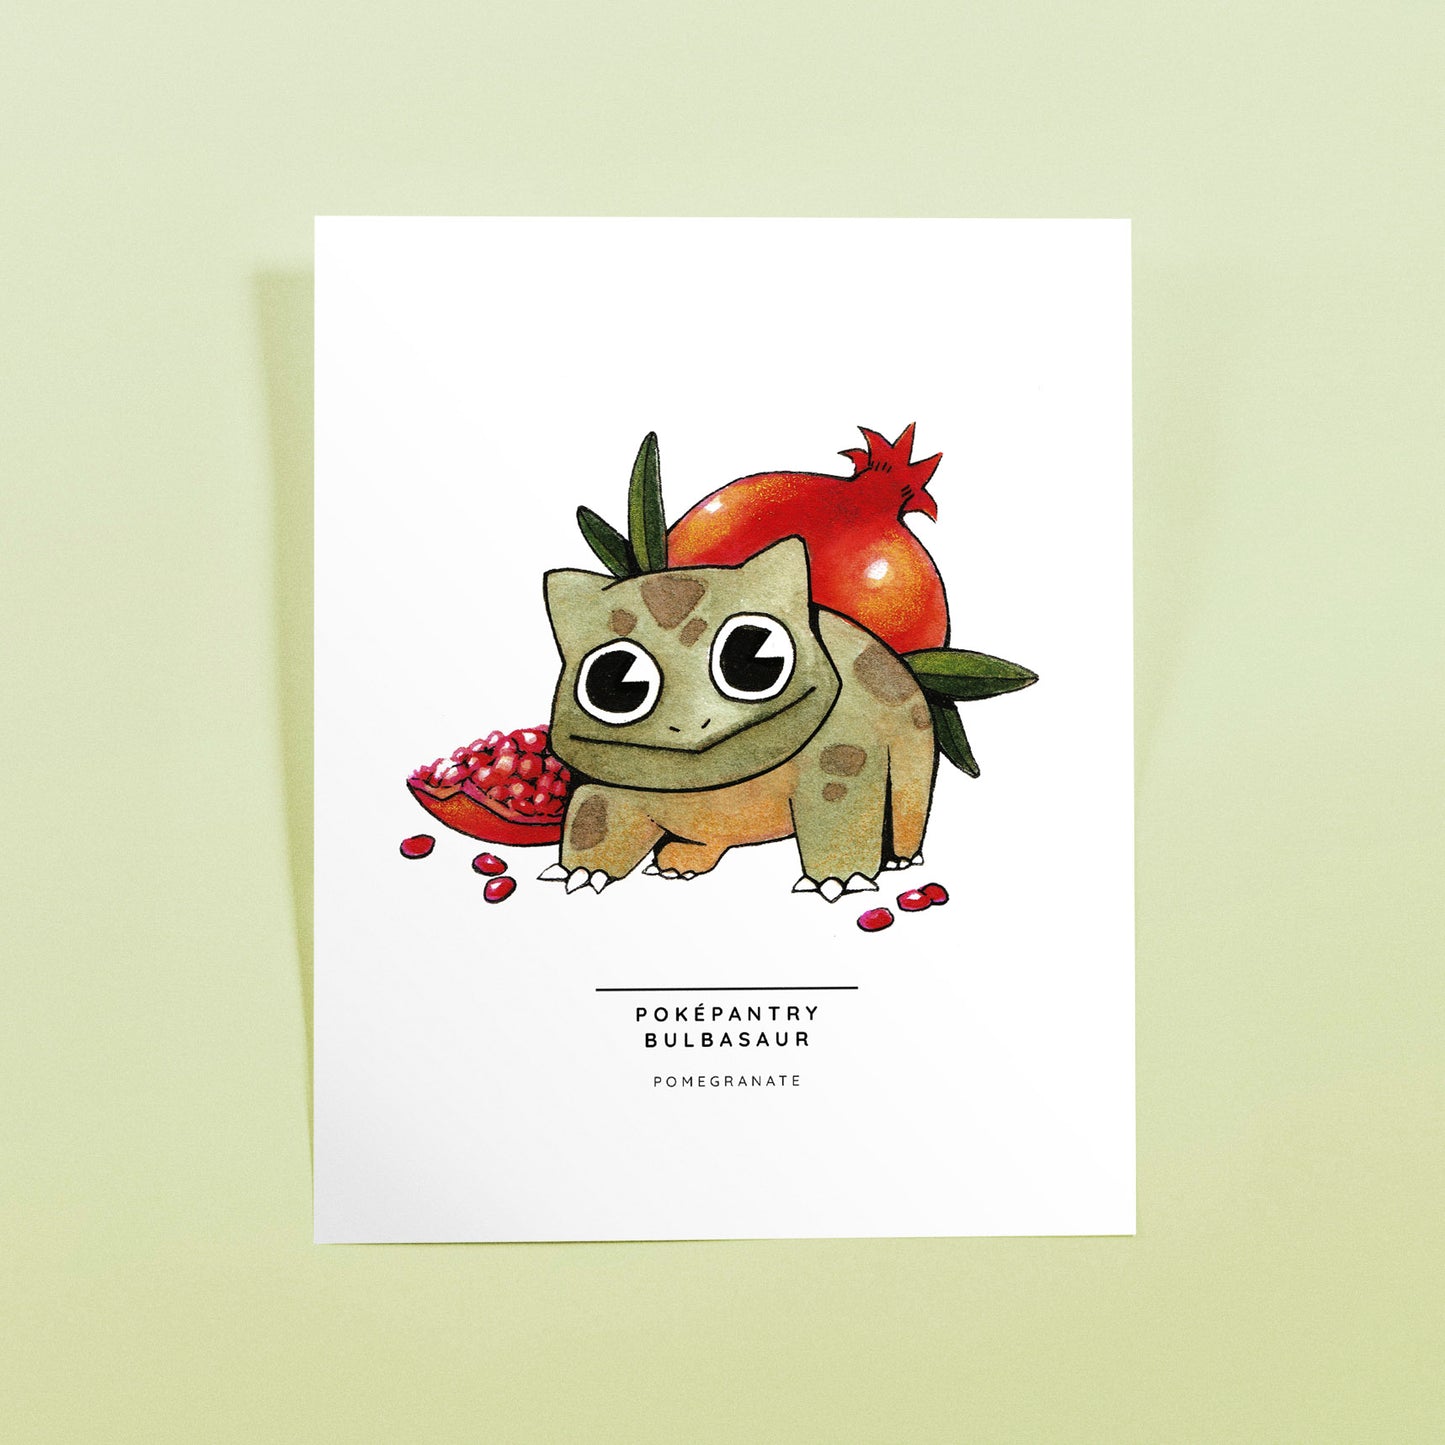 Poképantry Bulbasaur: Pomegranate